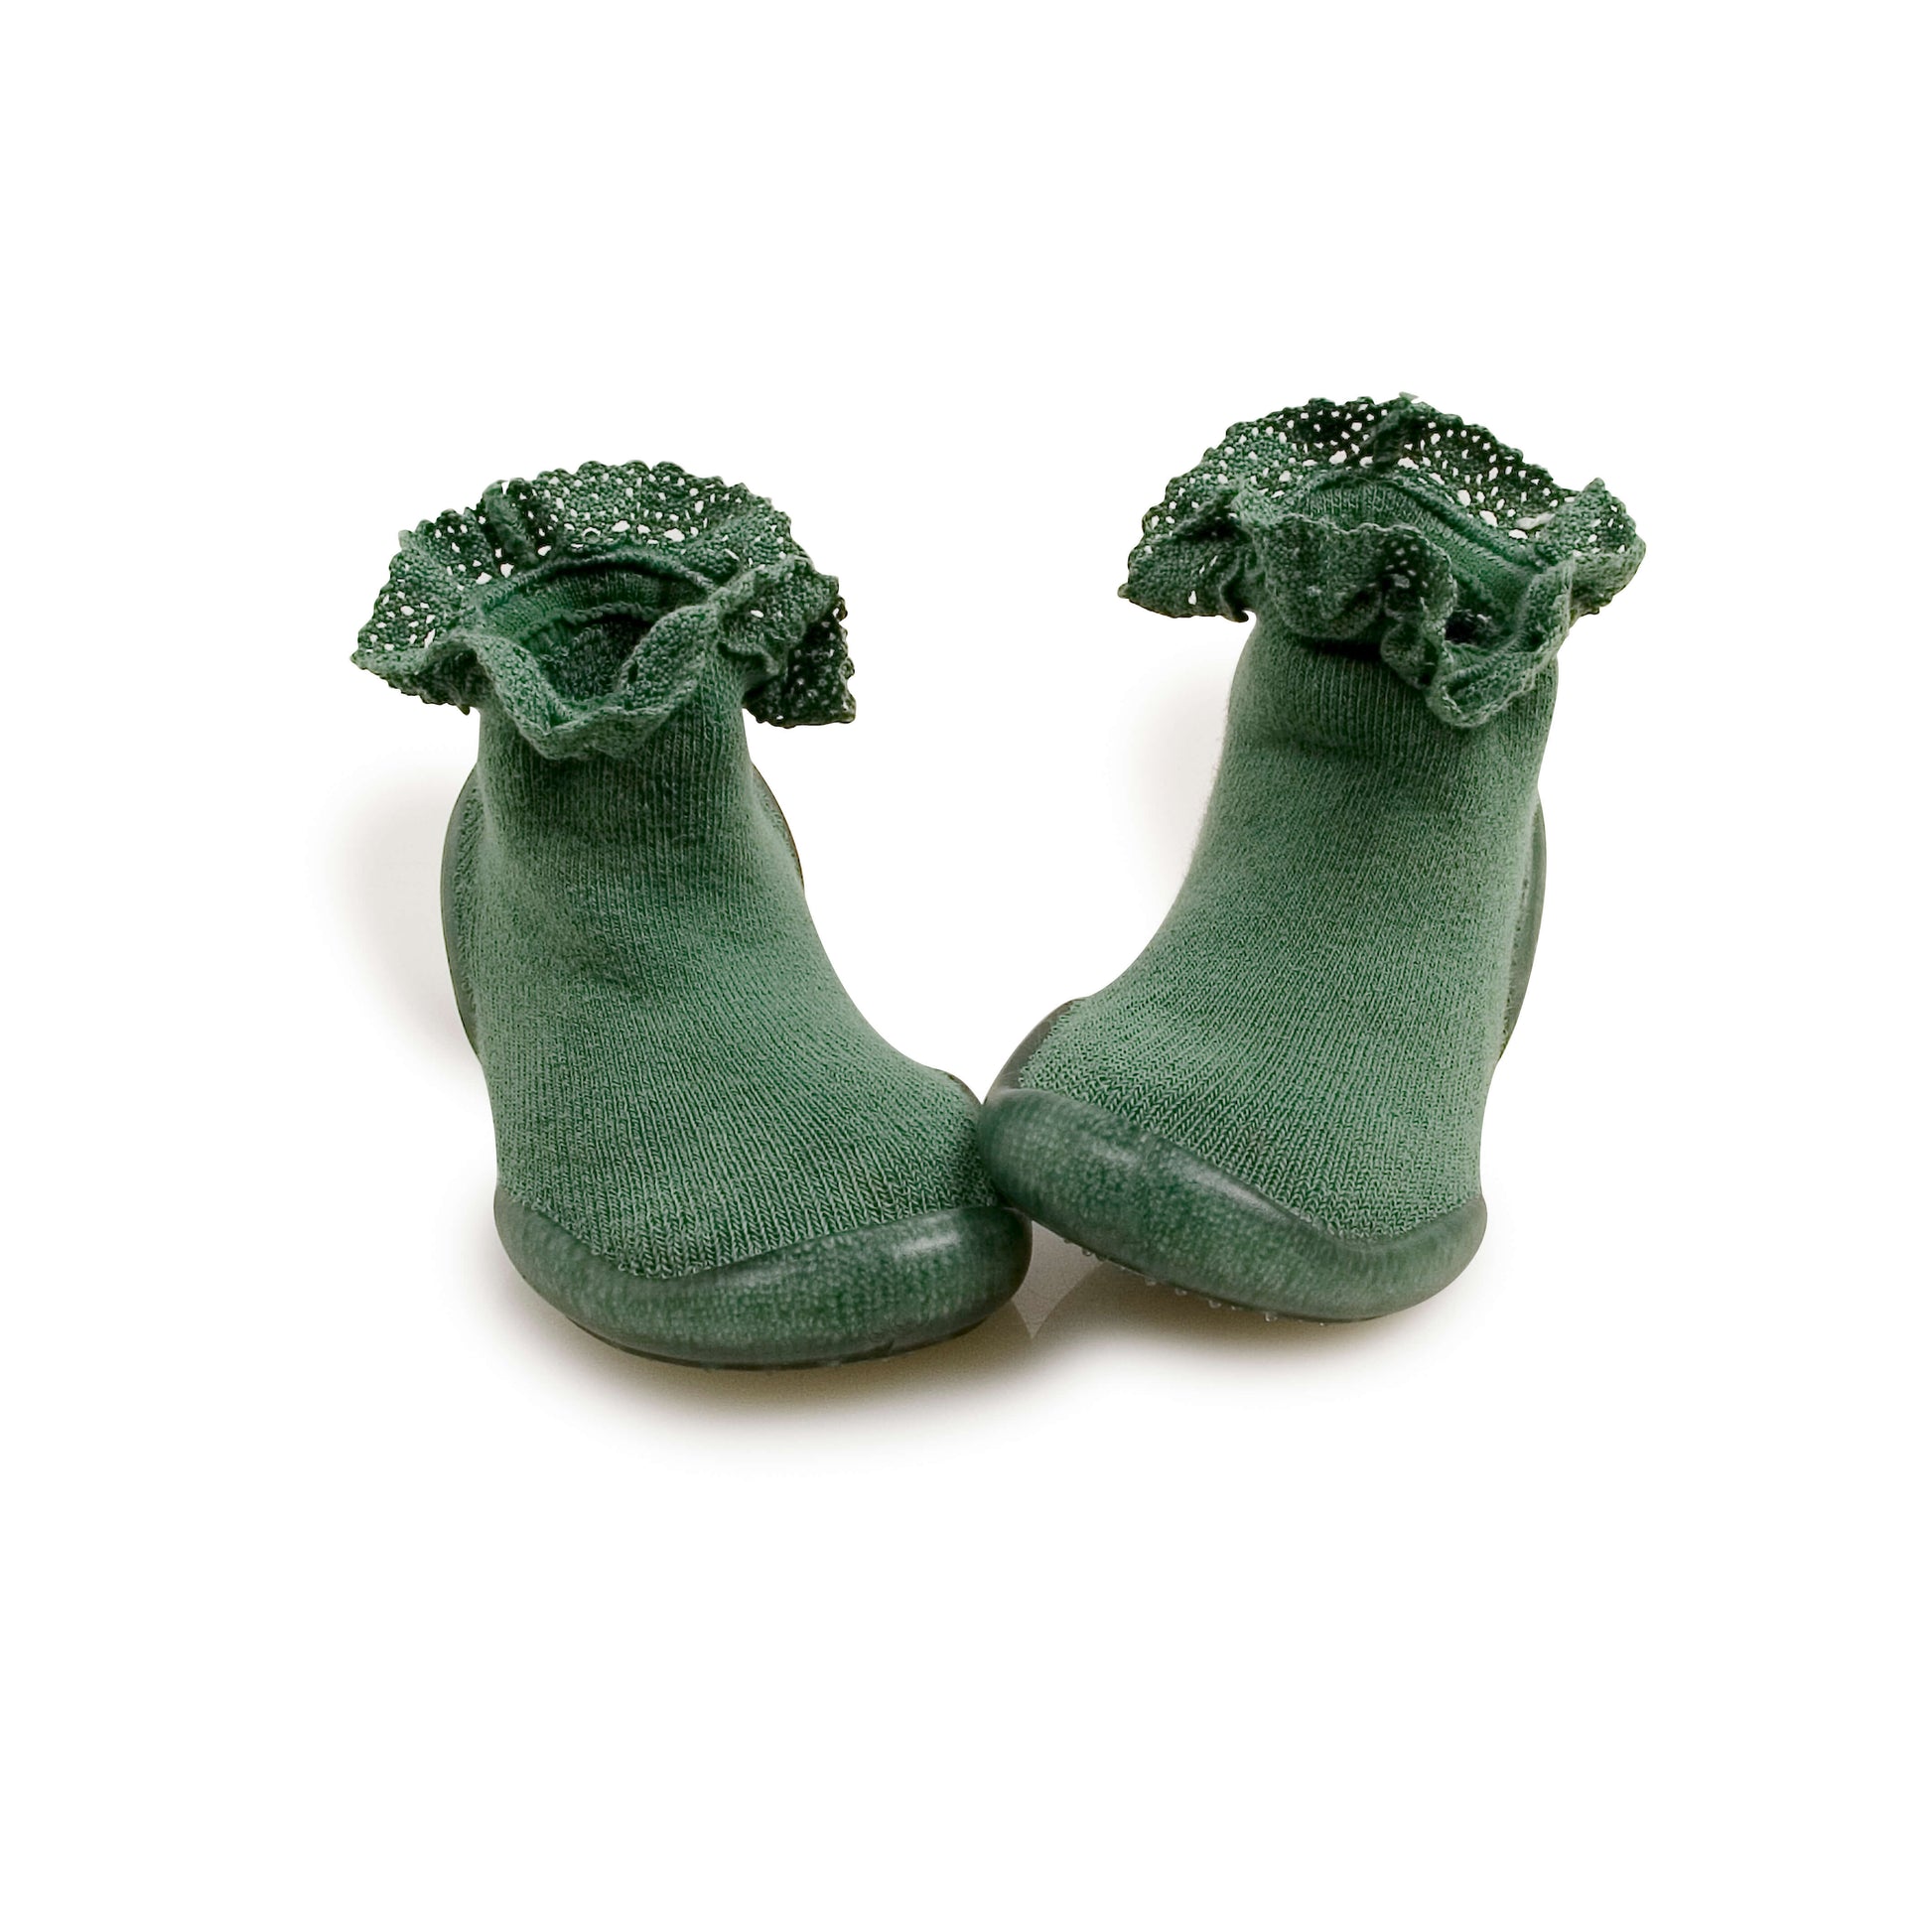 Collégien Chaussons Mademoiselle 748 - groene sokpantoffels met kant